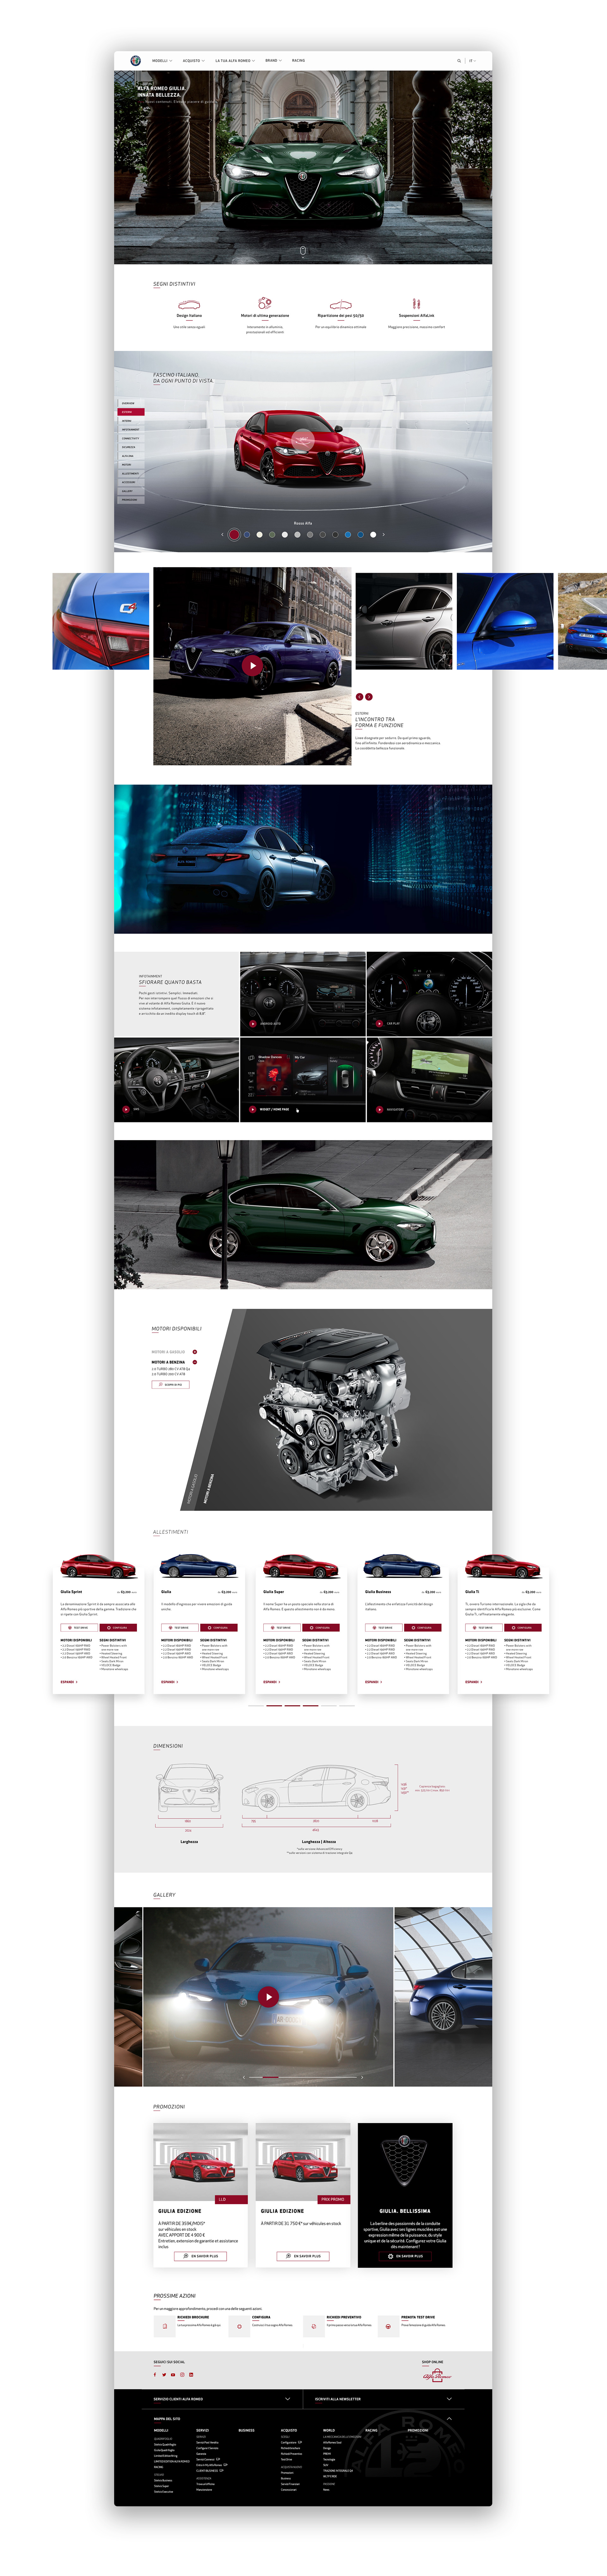 FCA Alfa Romeo Model Page User Interface